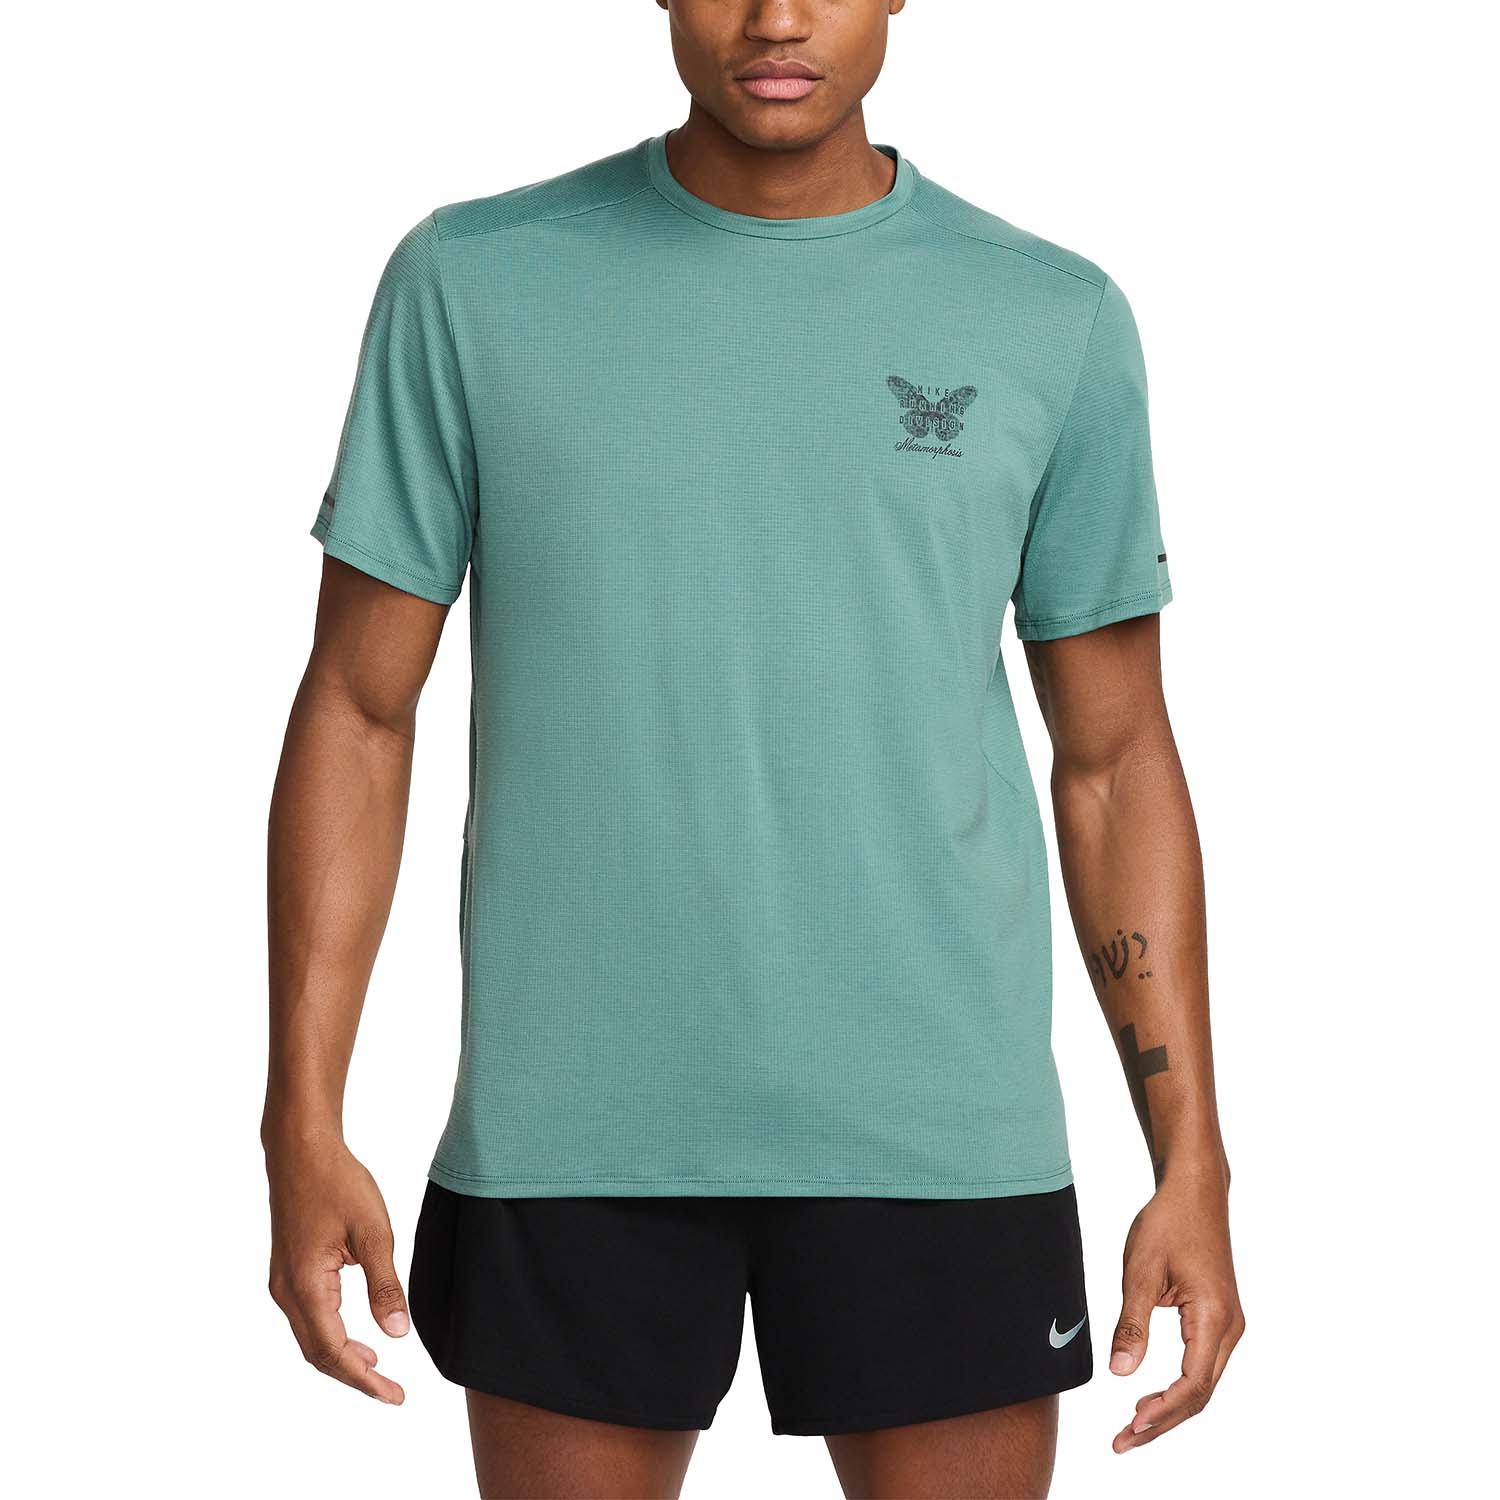 Nike Dri-FIT Rise Logo Camiseta - Bicoastal/Barely Green/Black